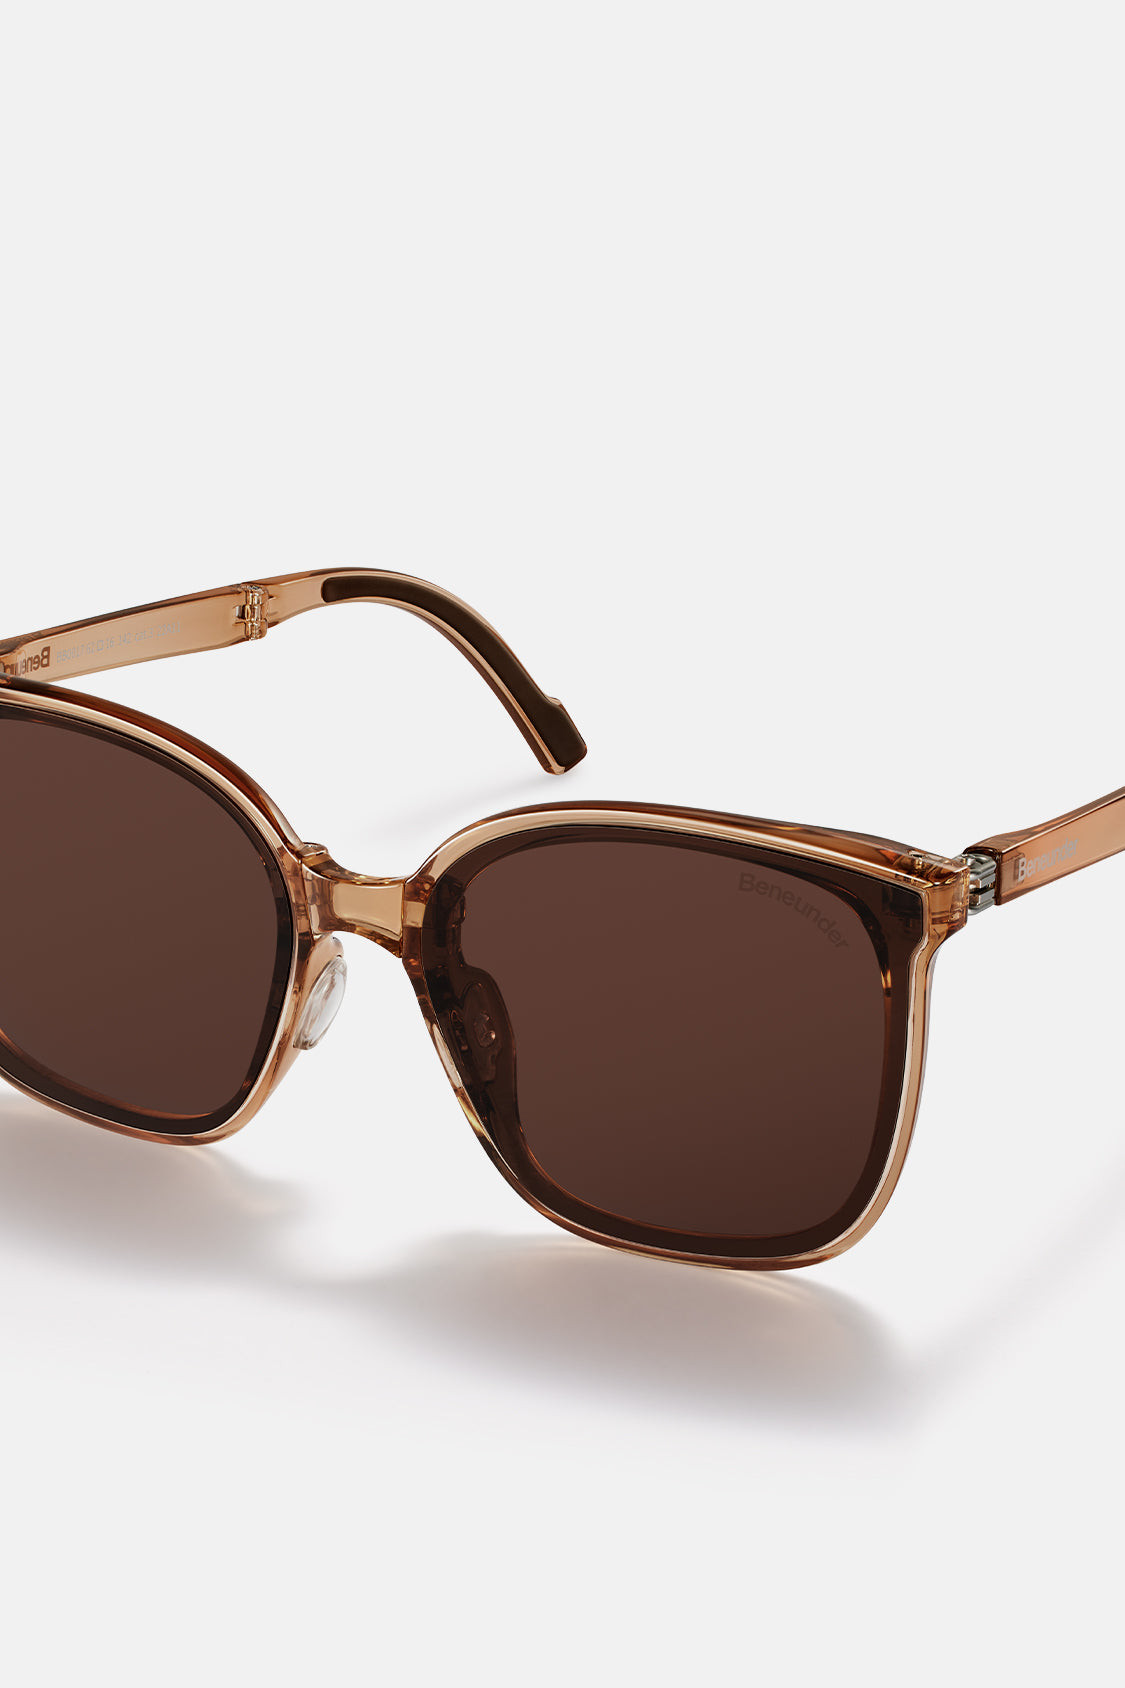 beneunder men's neonspace polarized folding sunglasses shades for women men #color_osmanthus brown